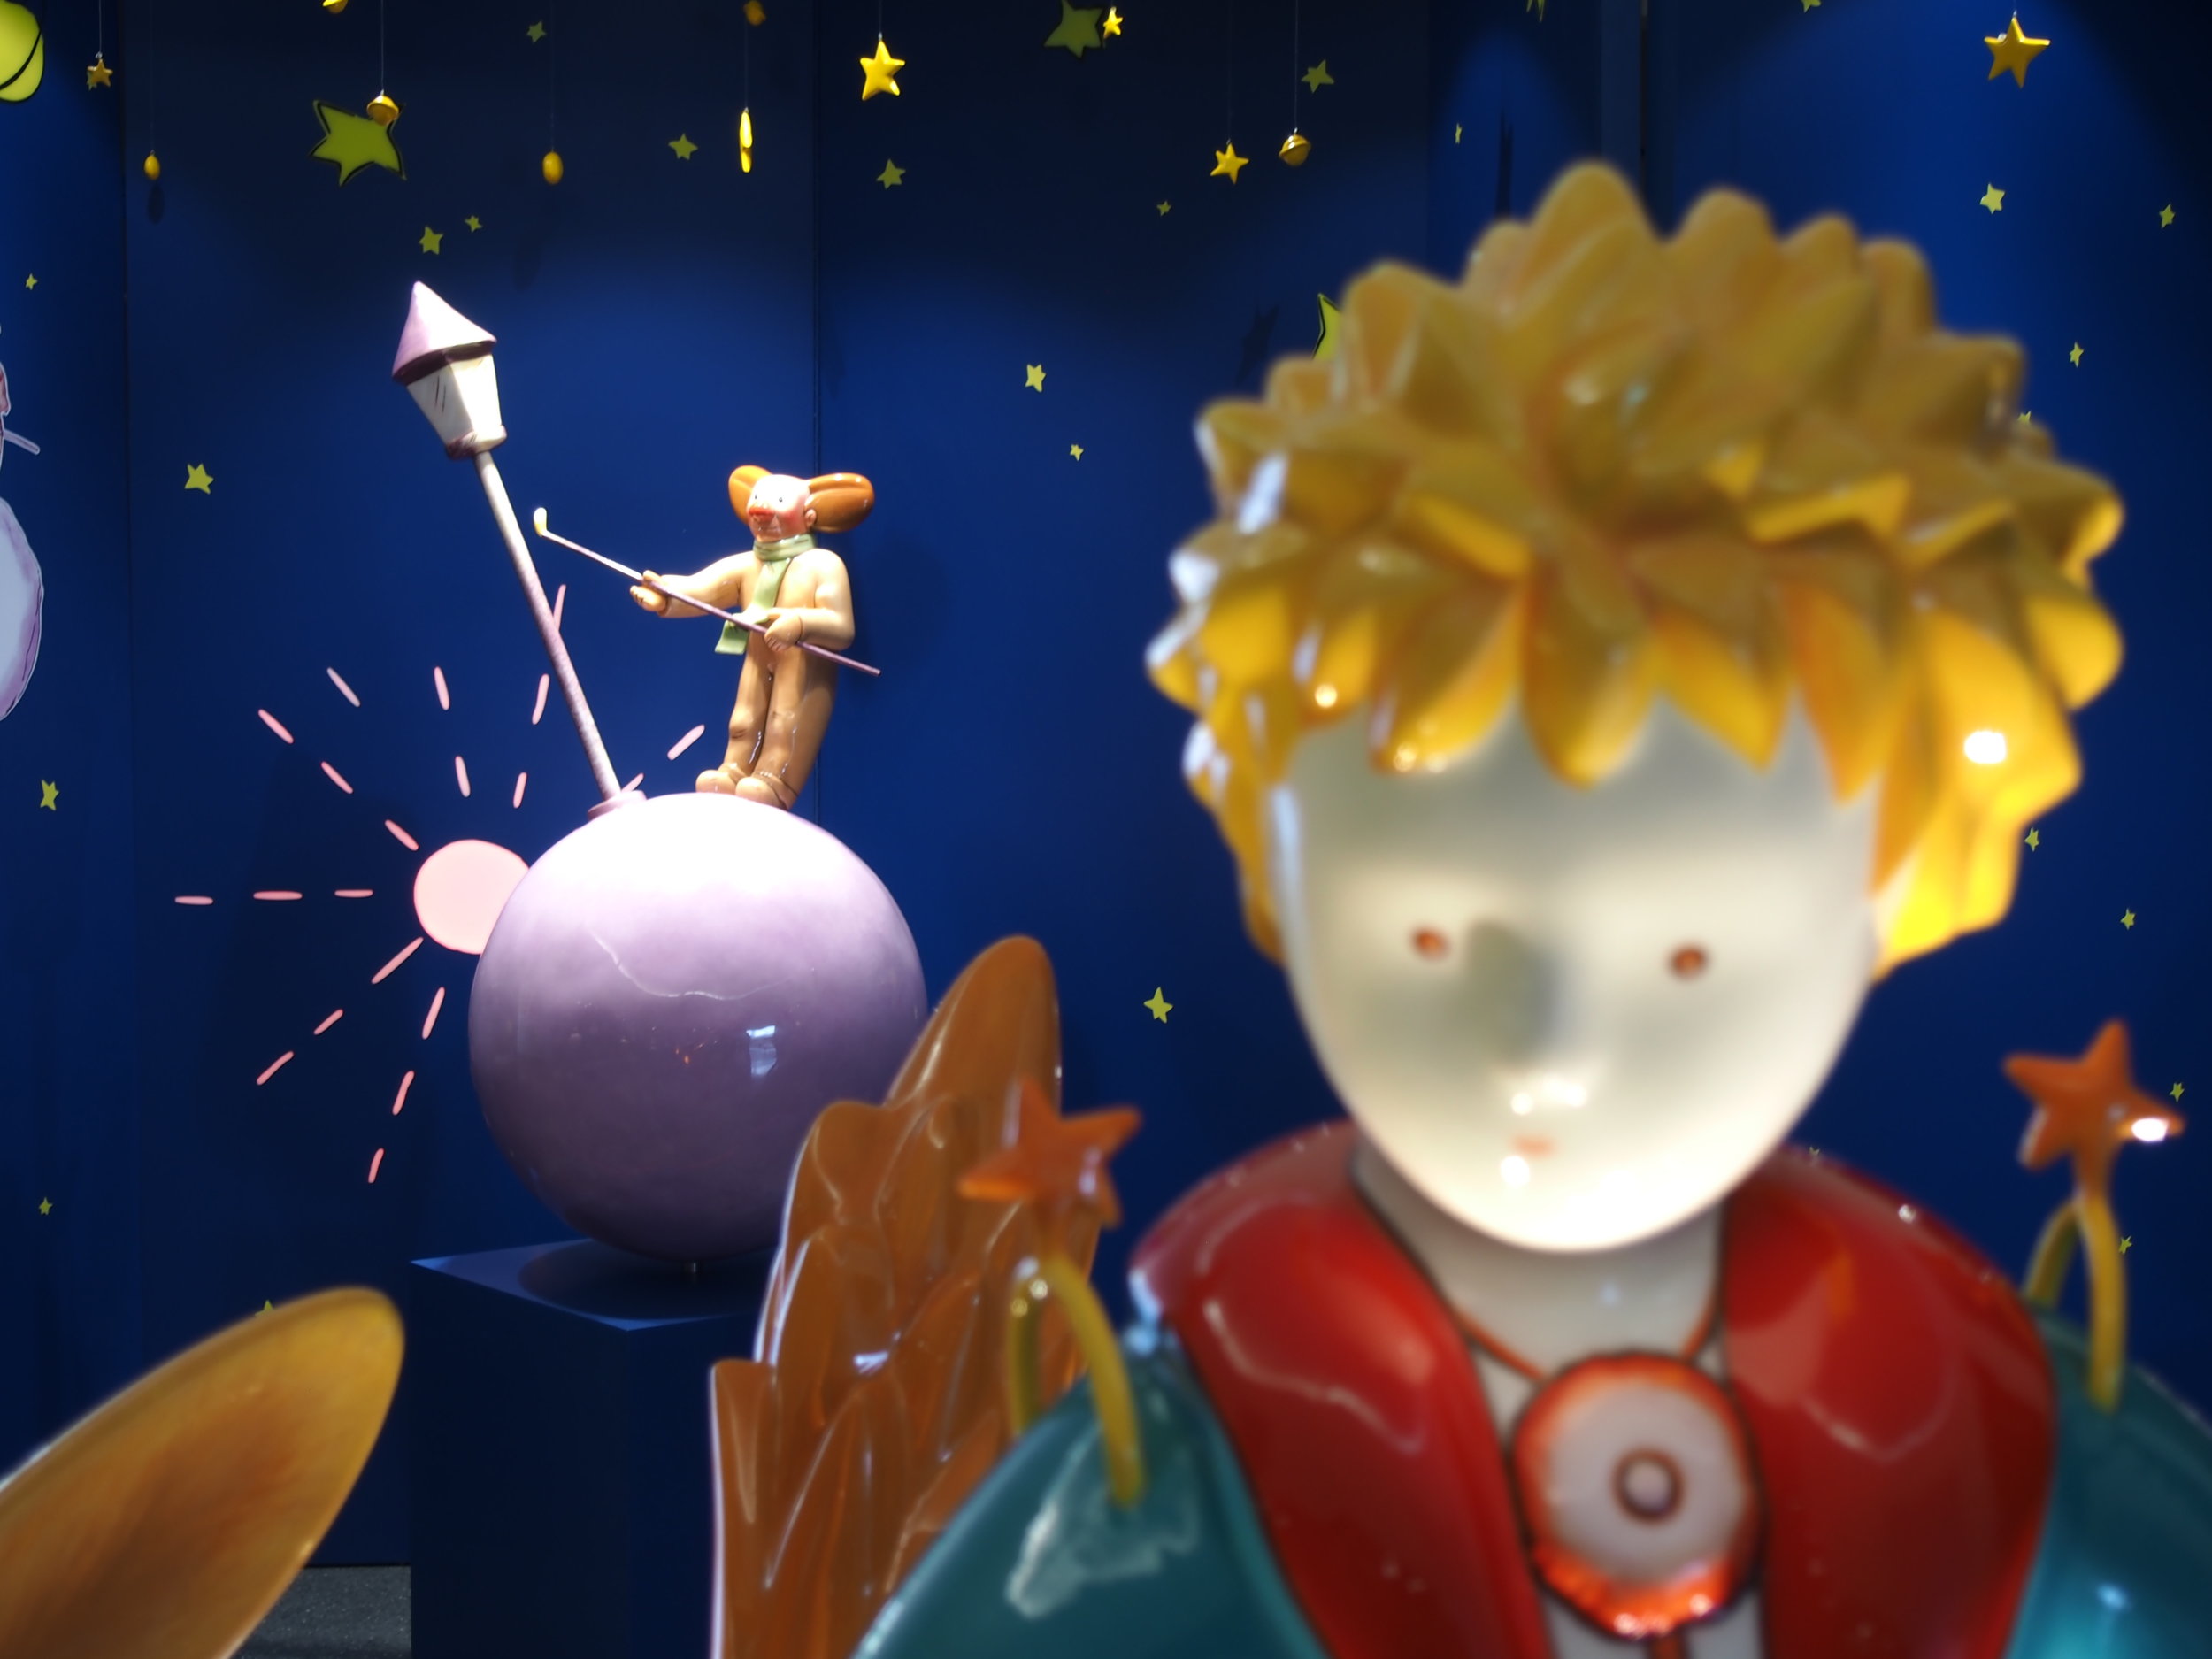 Little Prince exhibition by artist Arnaud Nazare-Aga Lamplighter sculpture